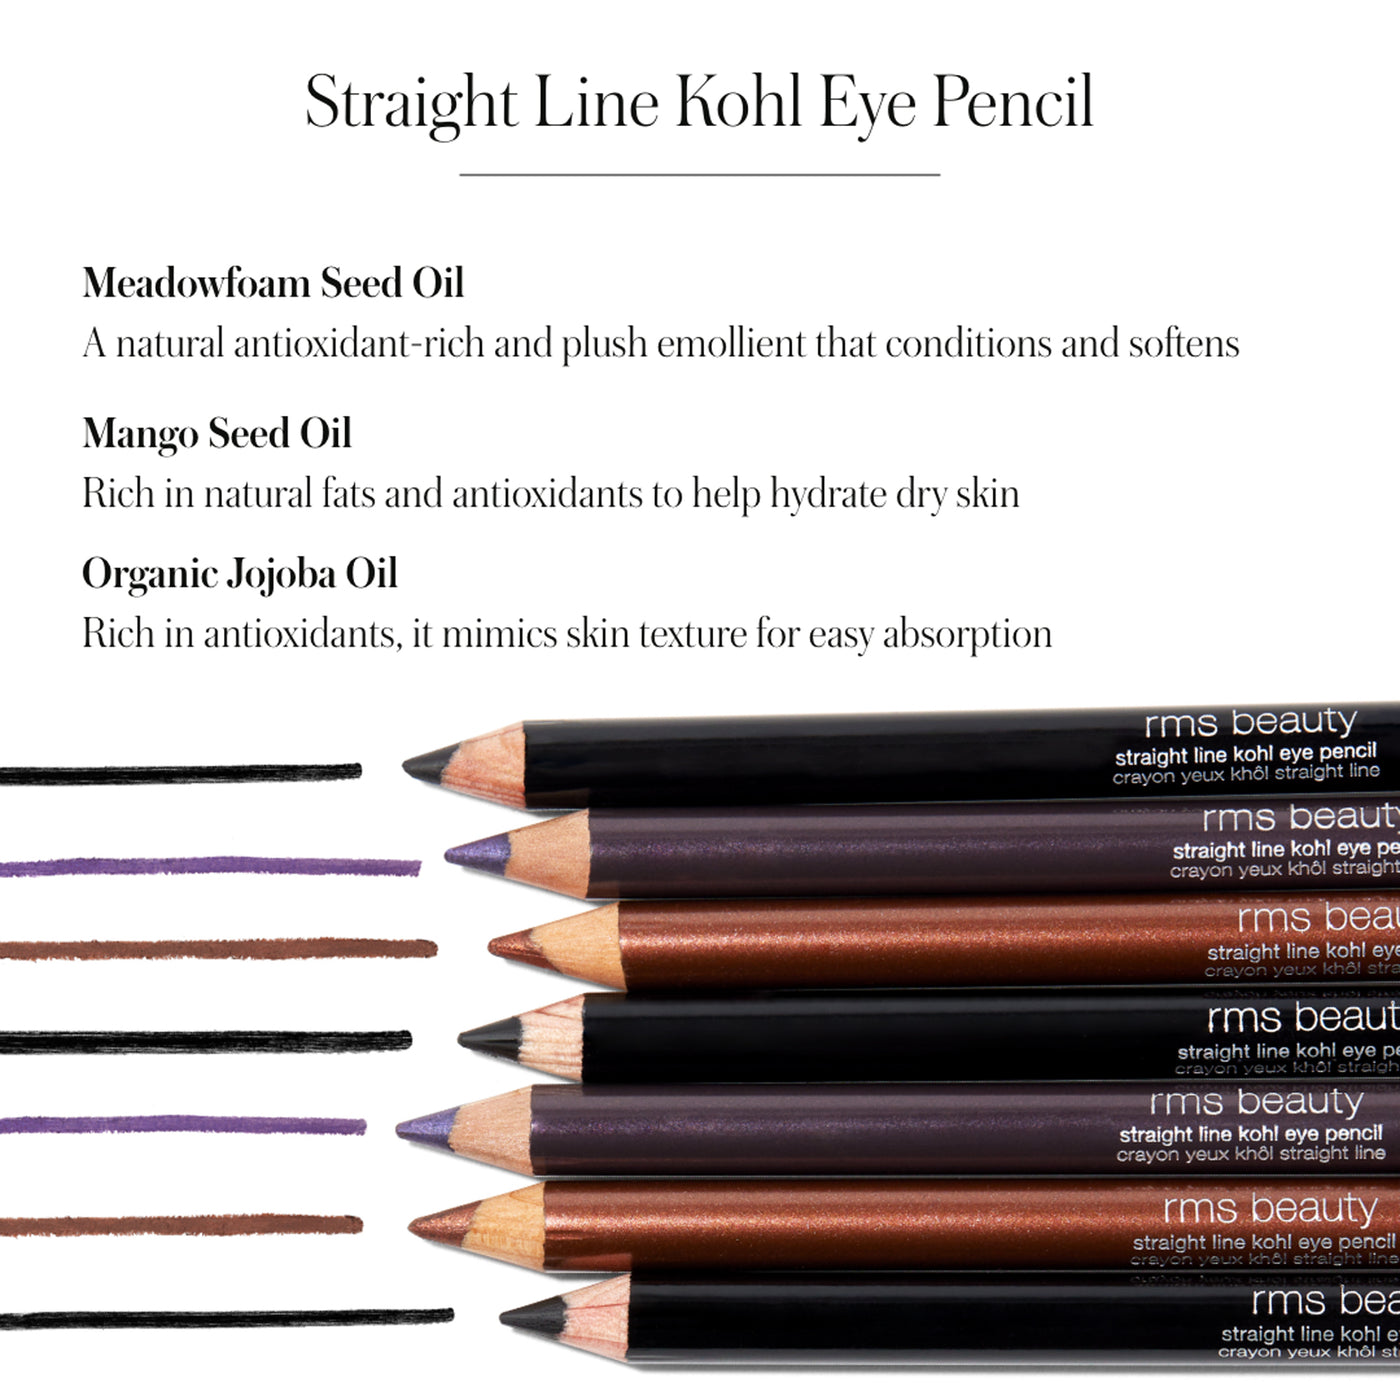 RMS Beauty Straight Line Kohl Eye Pencil in plum